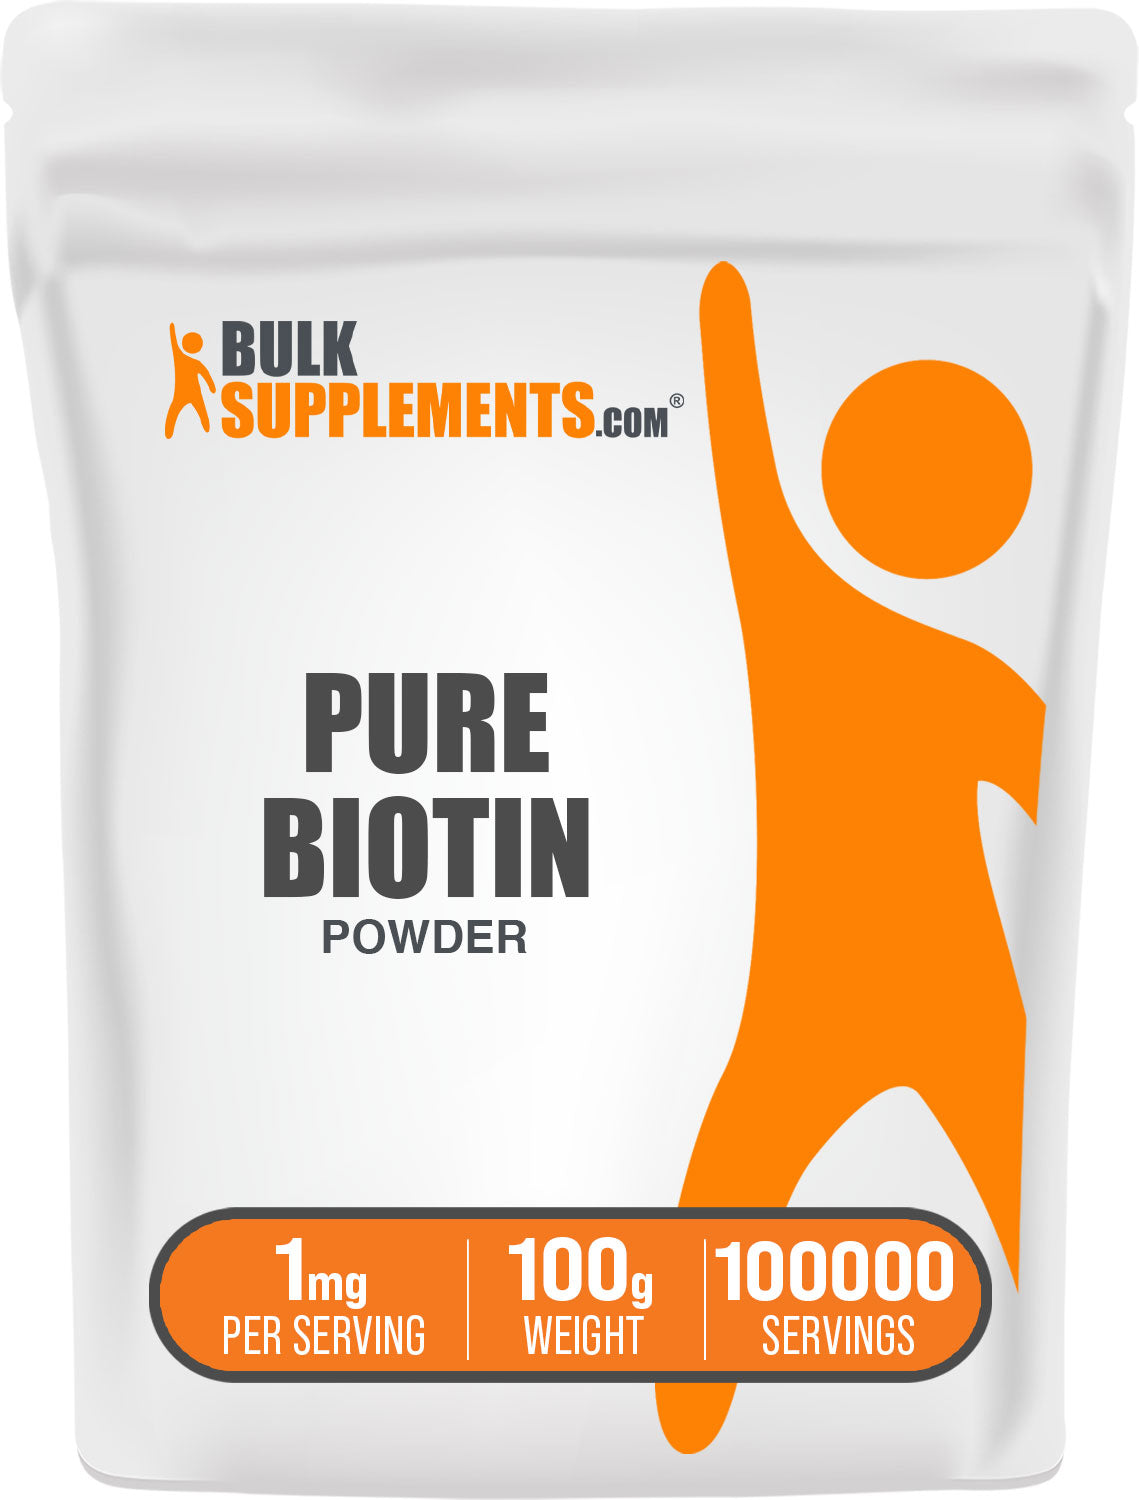 Pure Biotin Powder 100g bag